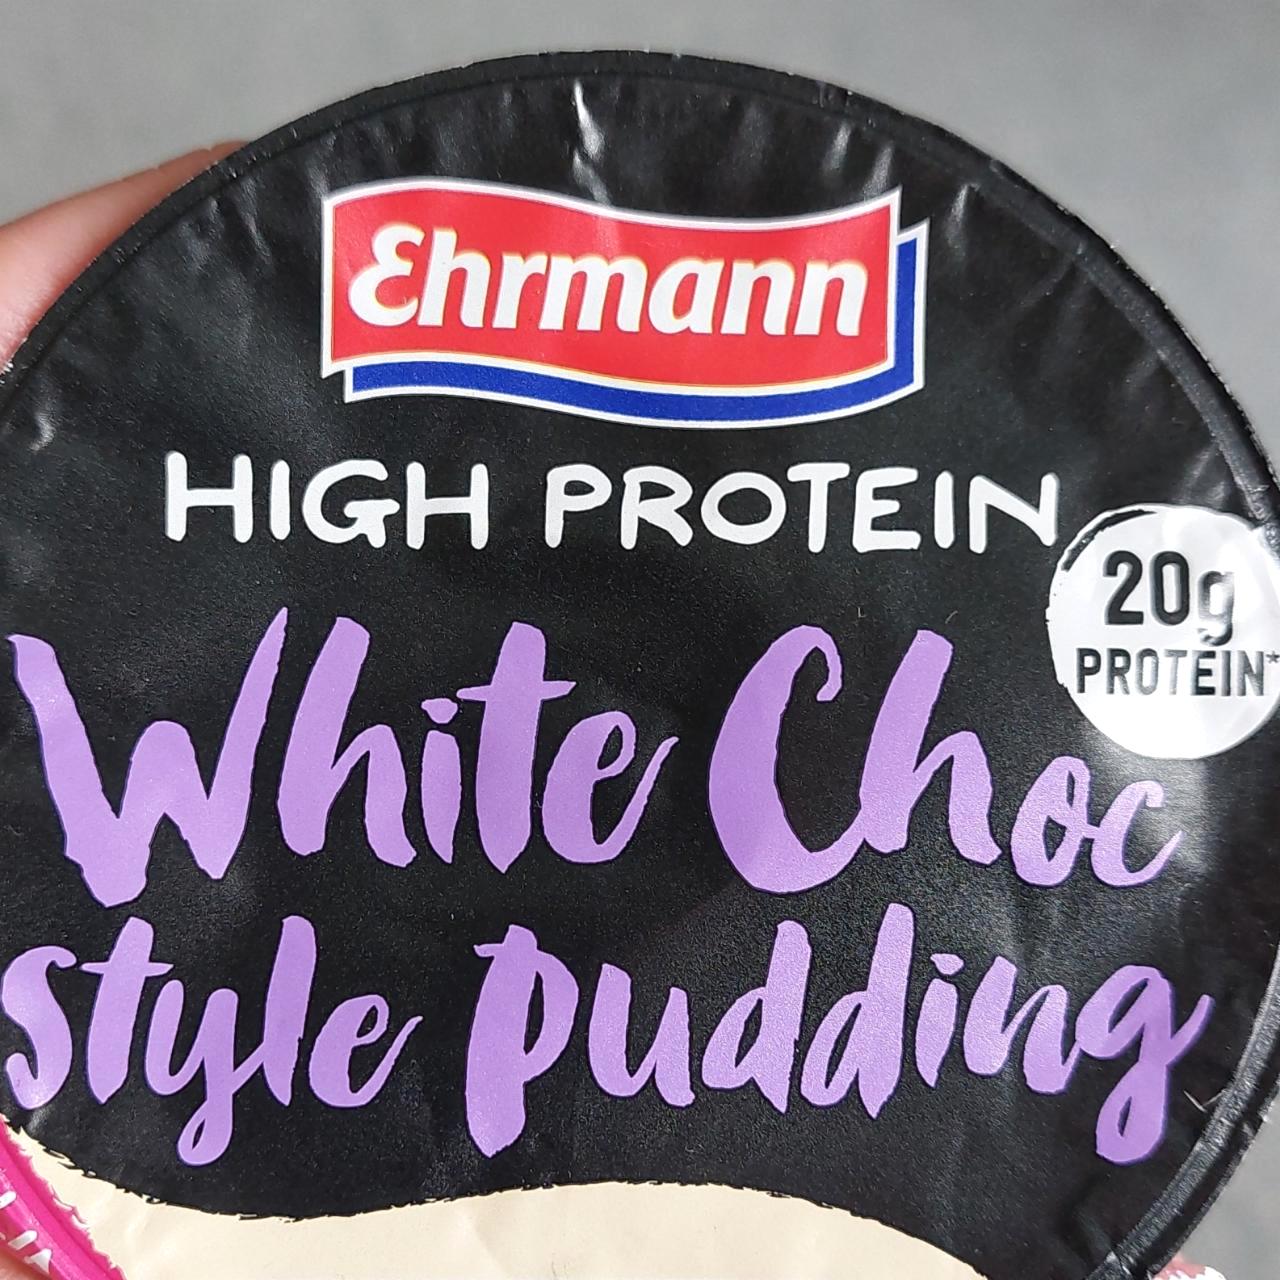 Képek - High protein White Choc style pudding Ehrmann